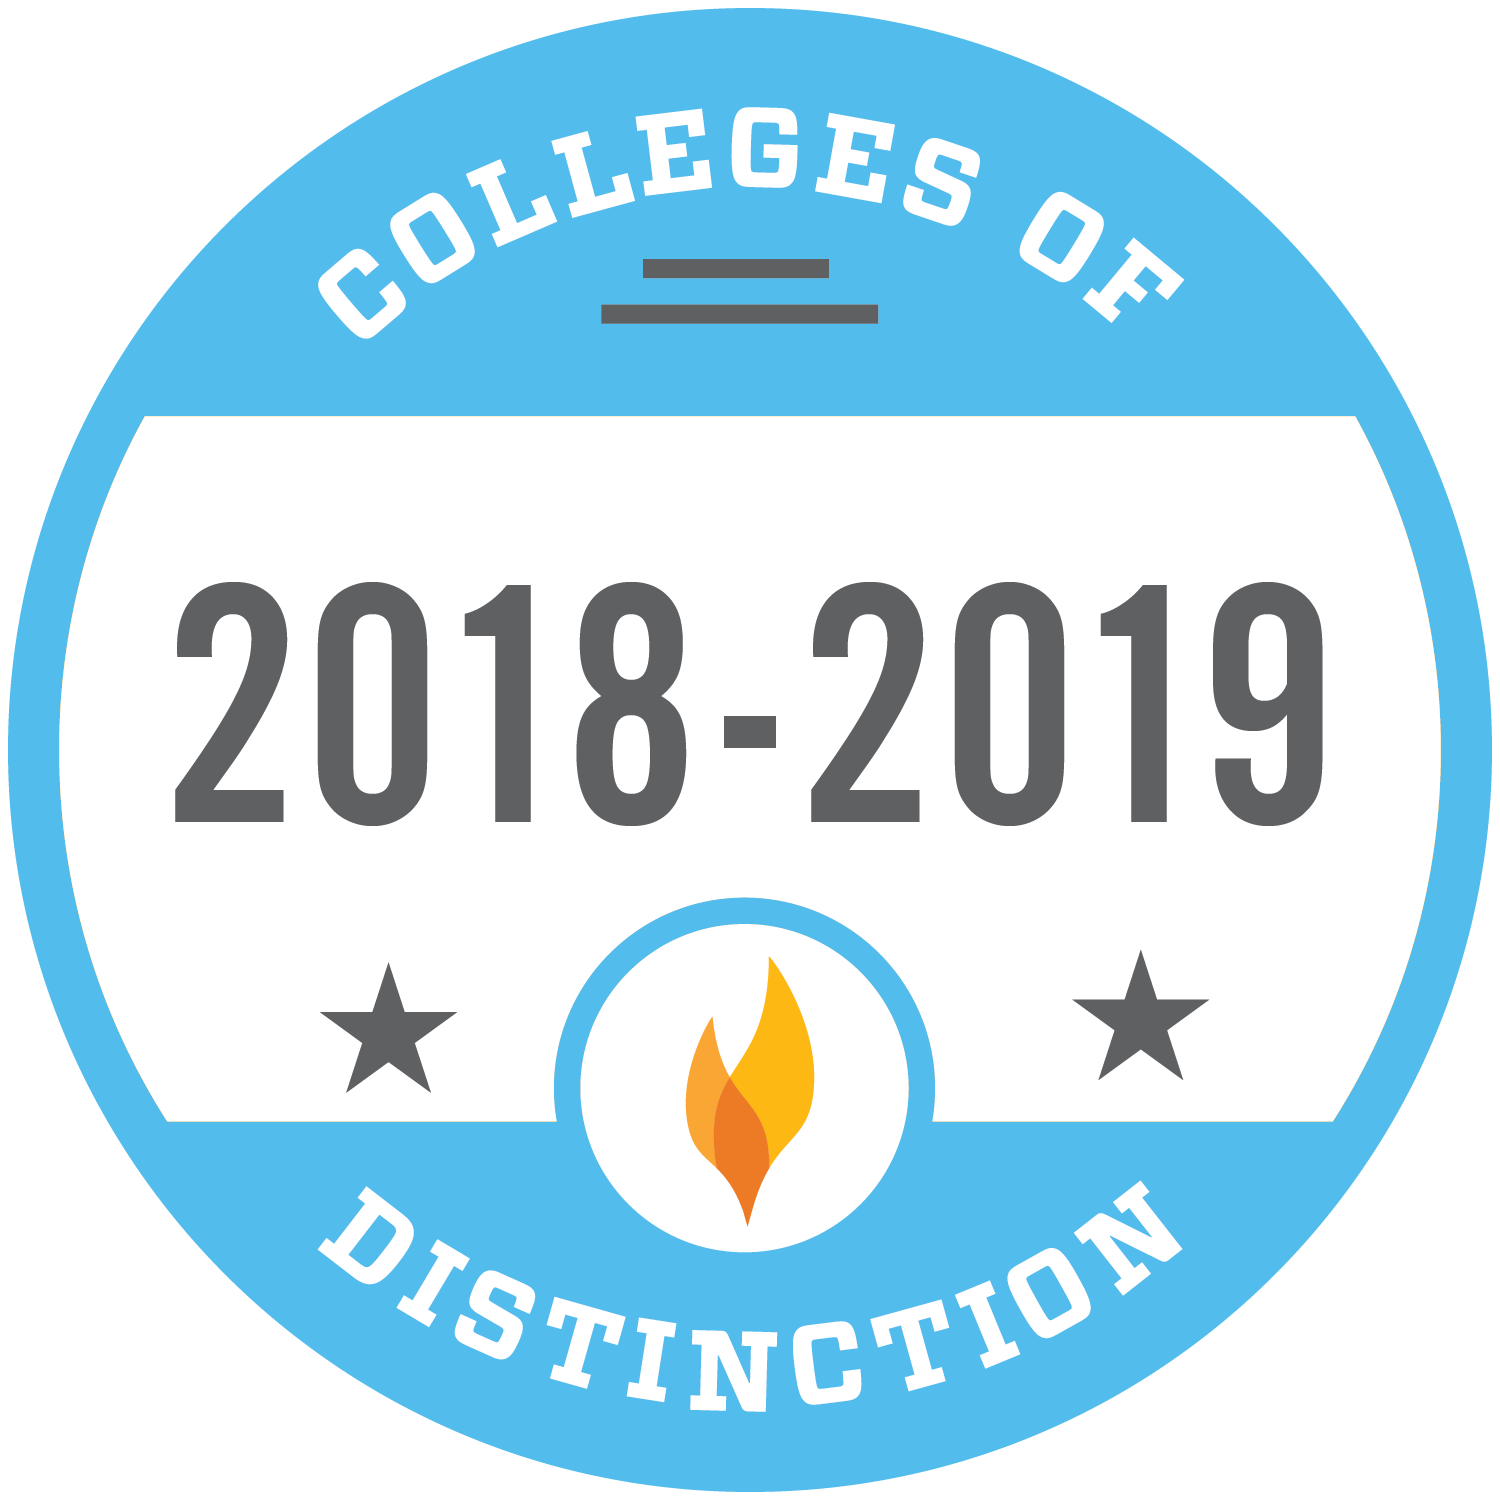 averett-university-honored-among-national-colleges-of-distinction